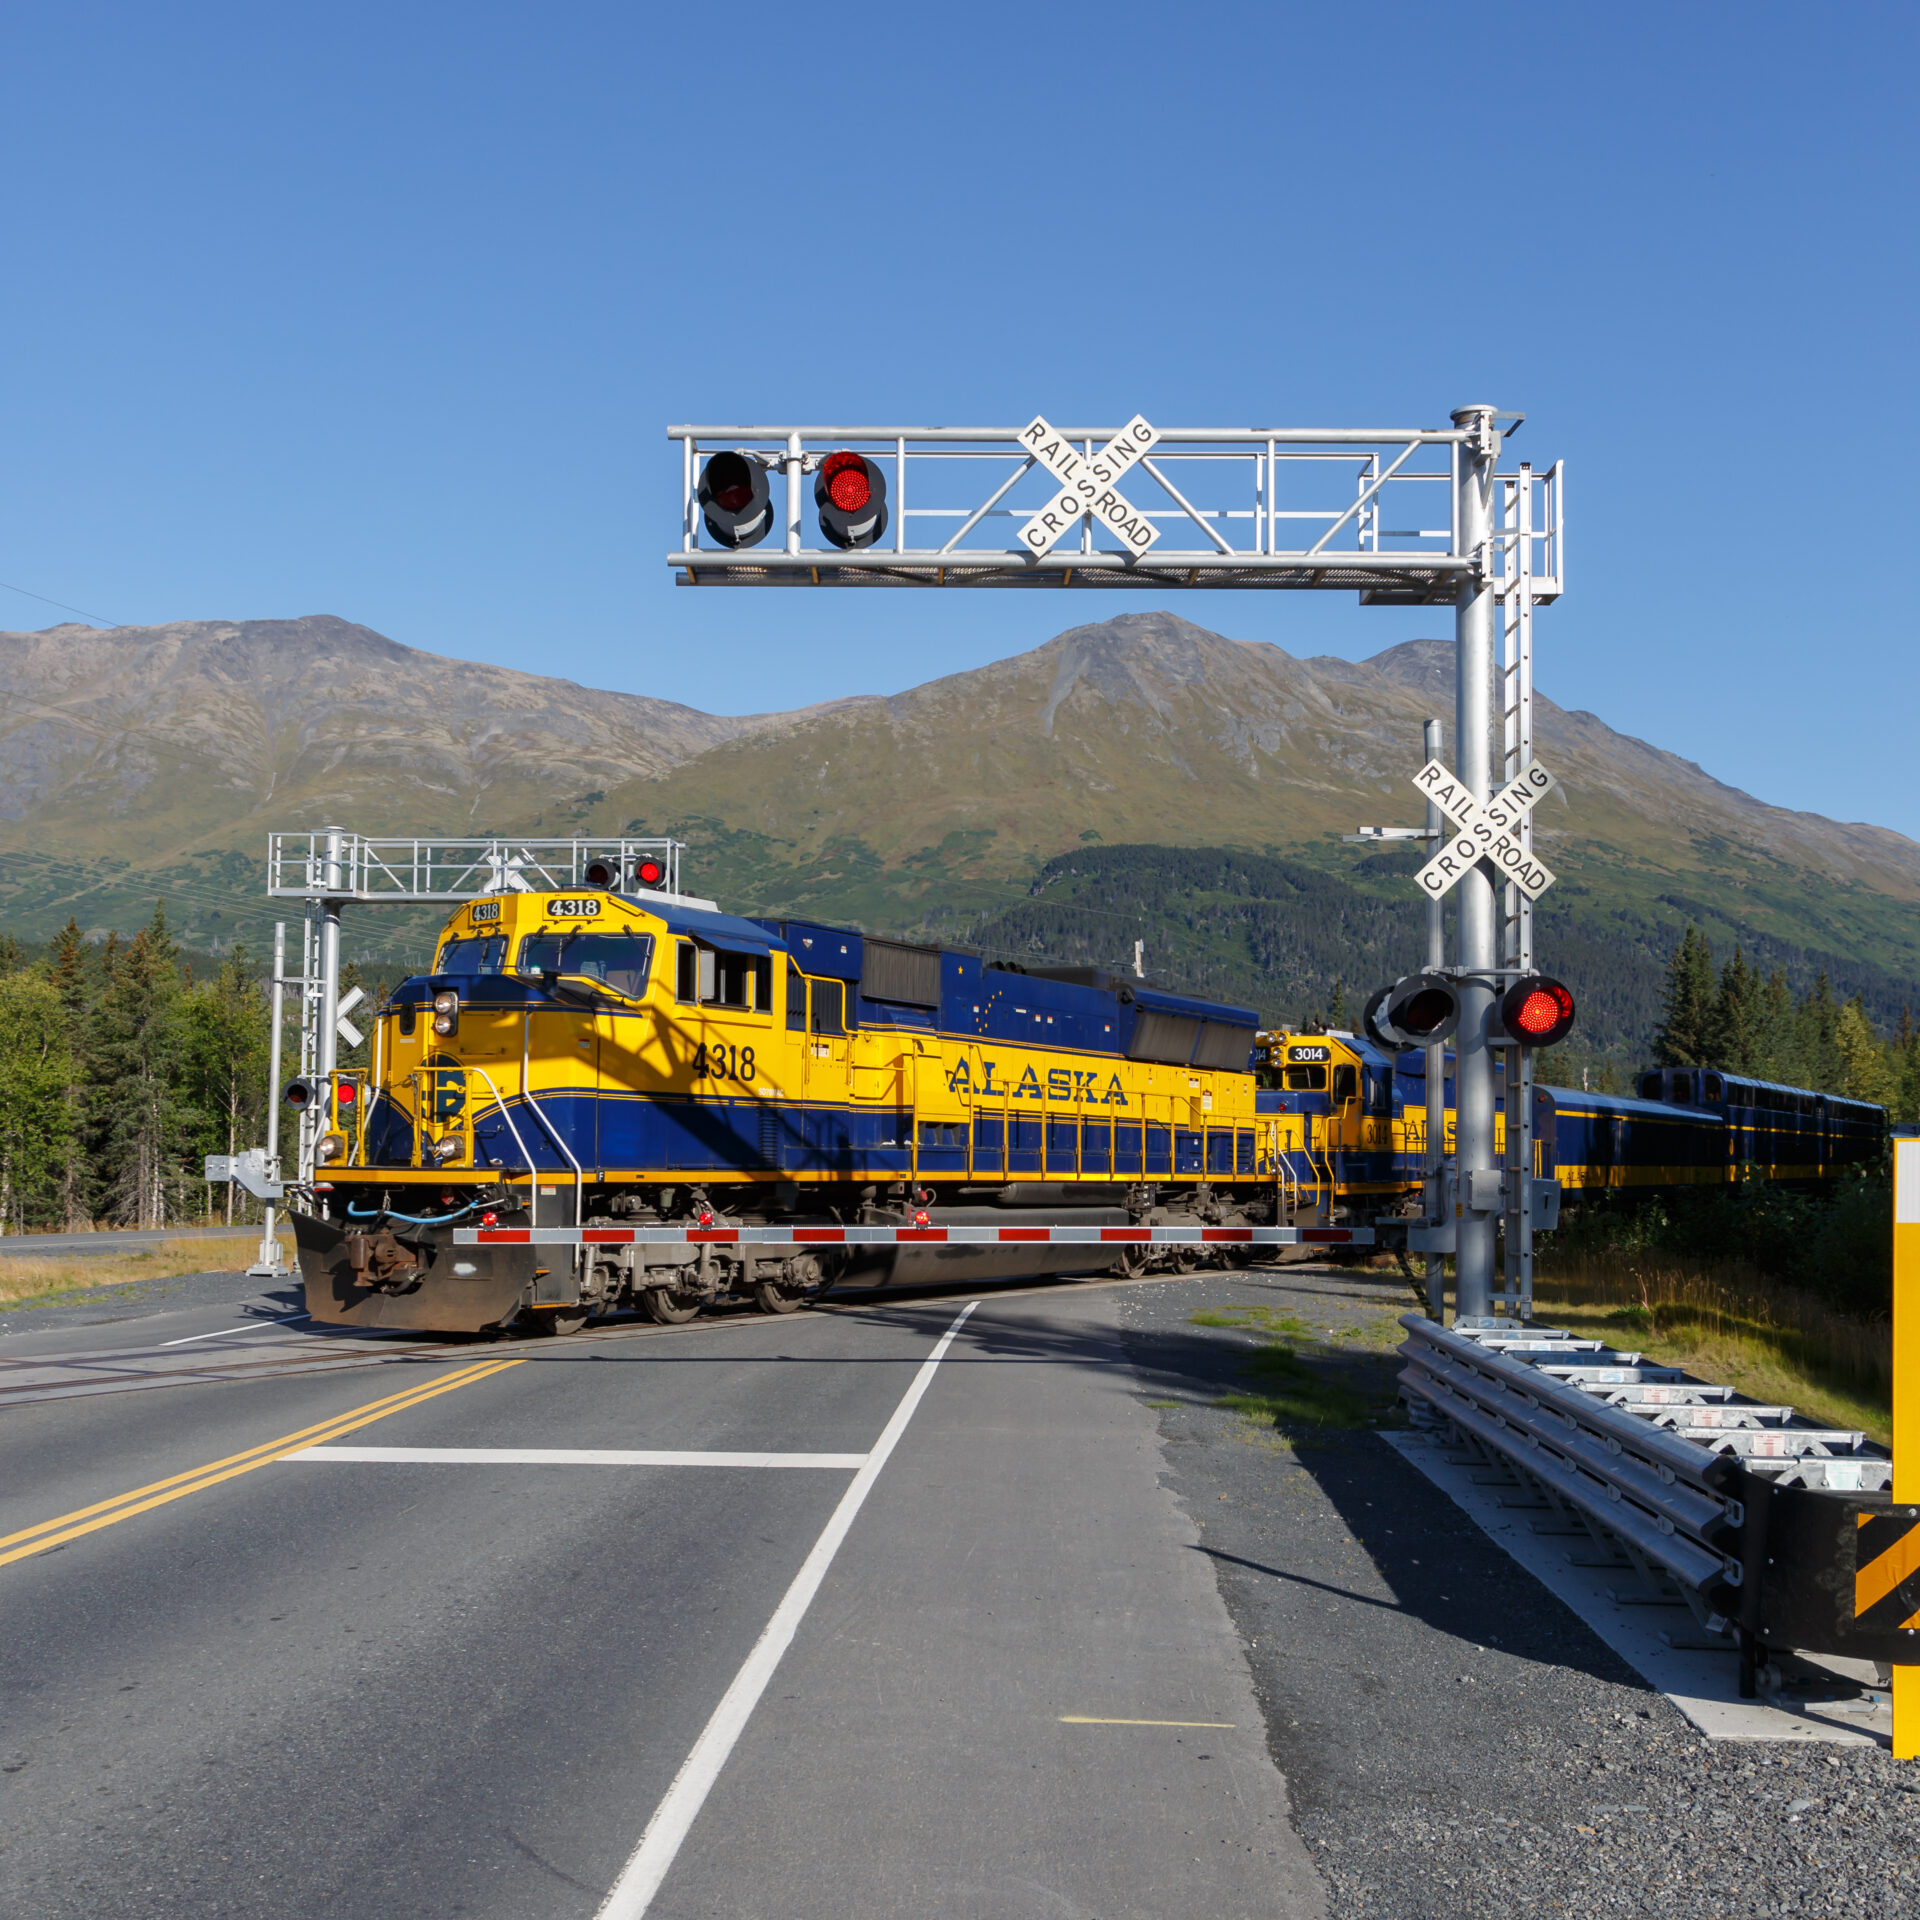 Ontdek Alaska en Yukon met trein en auto - Alaska trein - Menno Schaefer